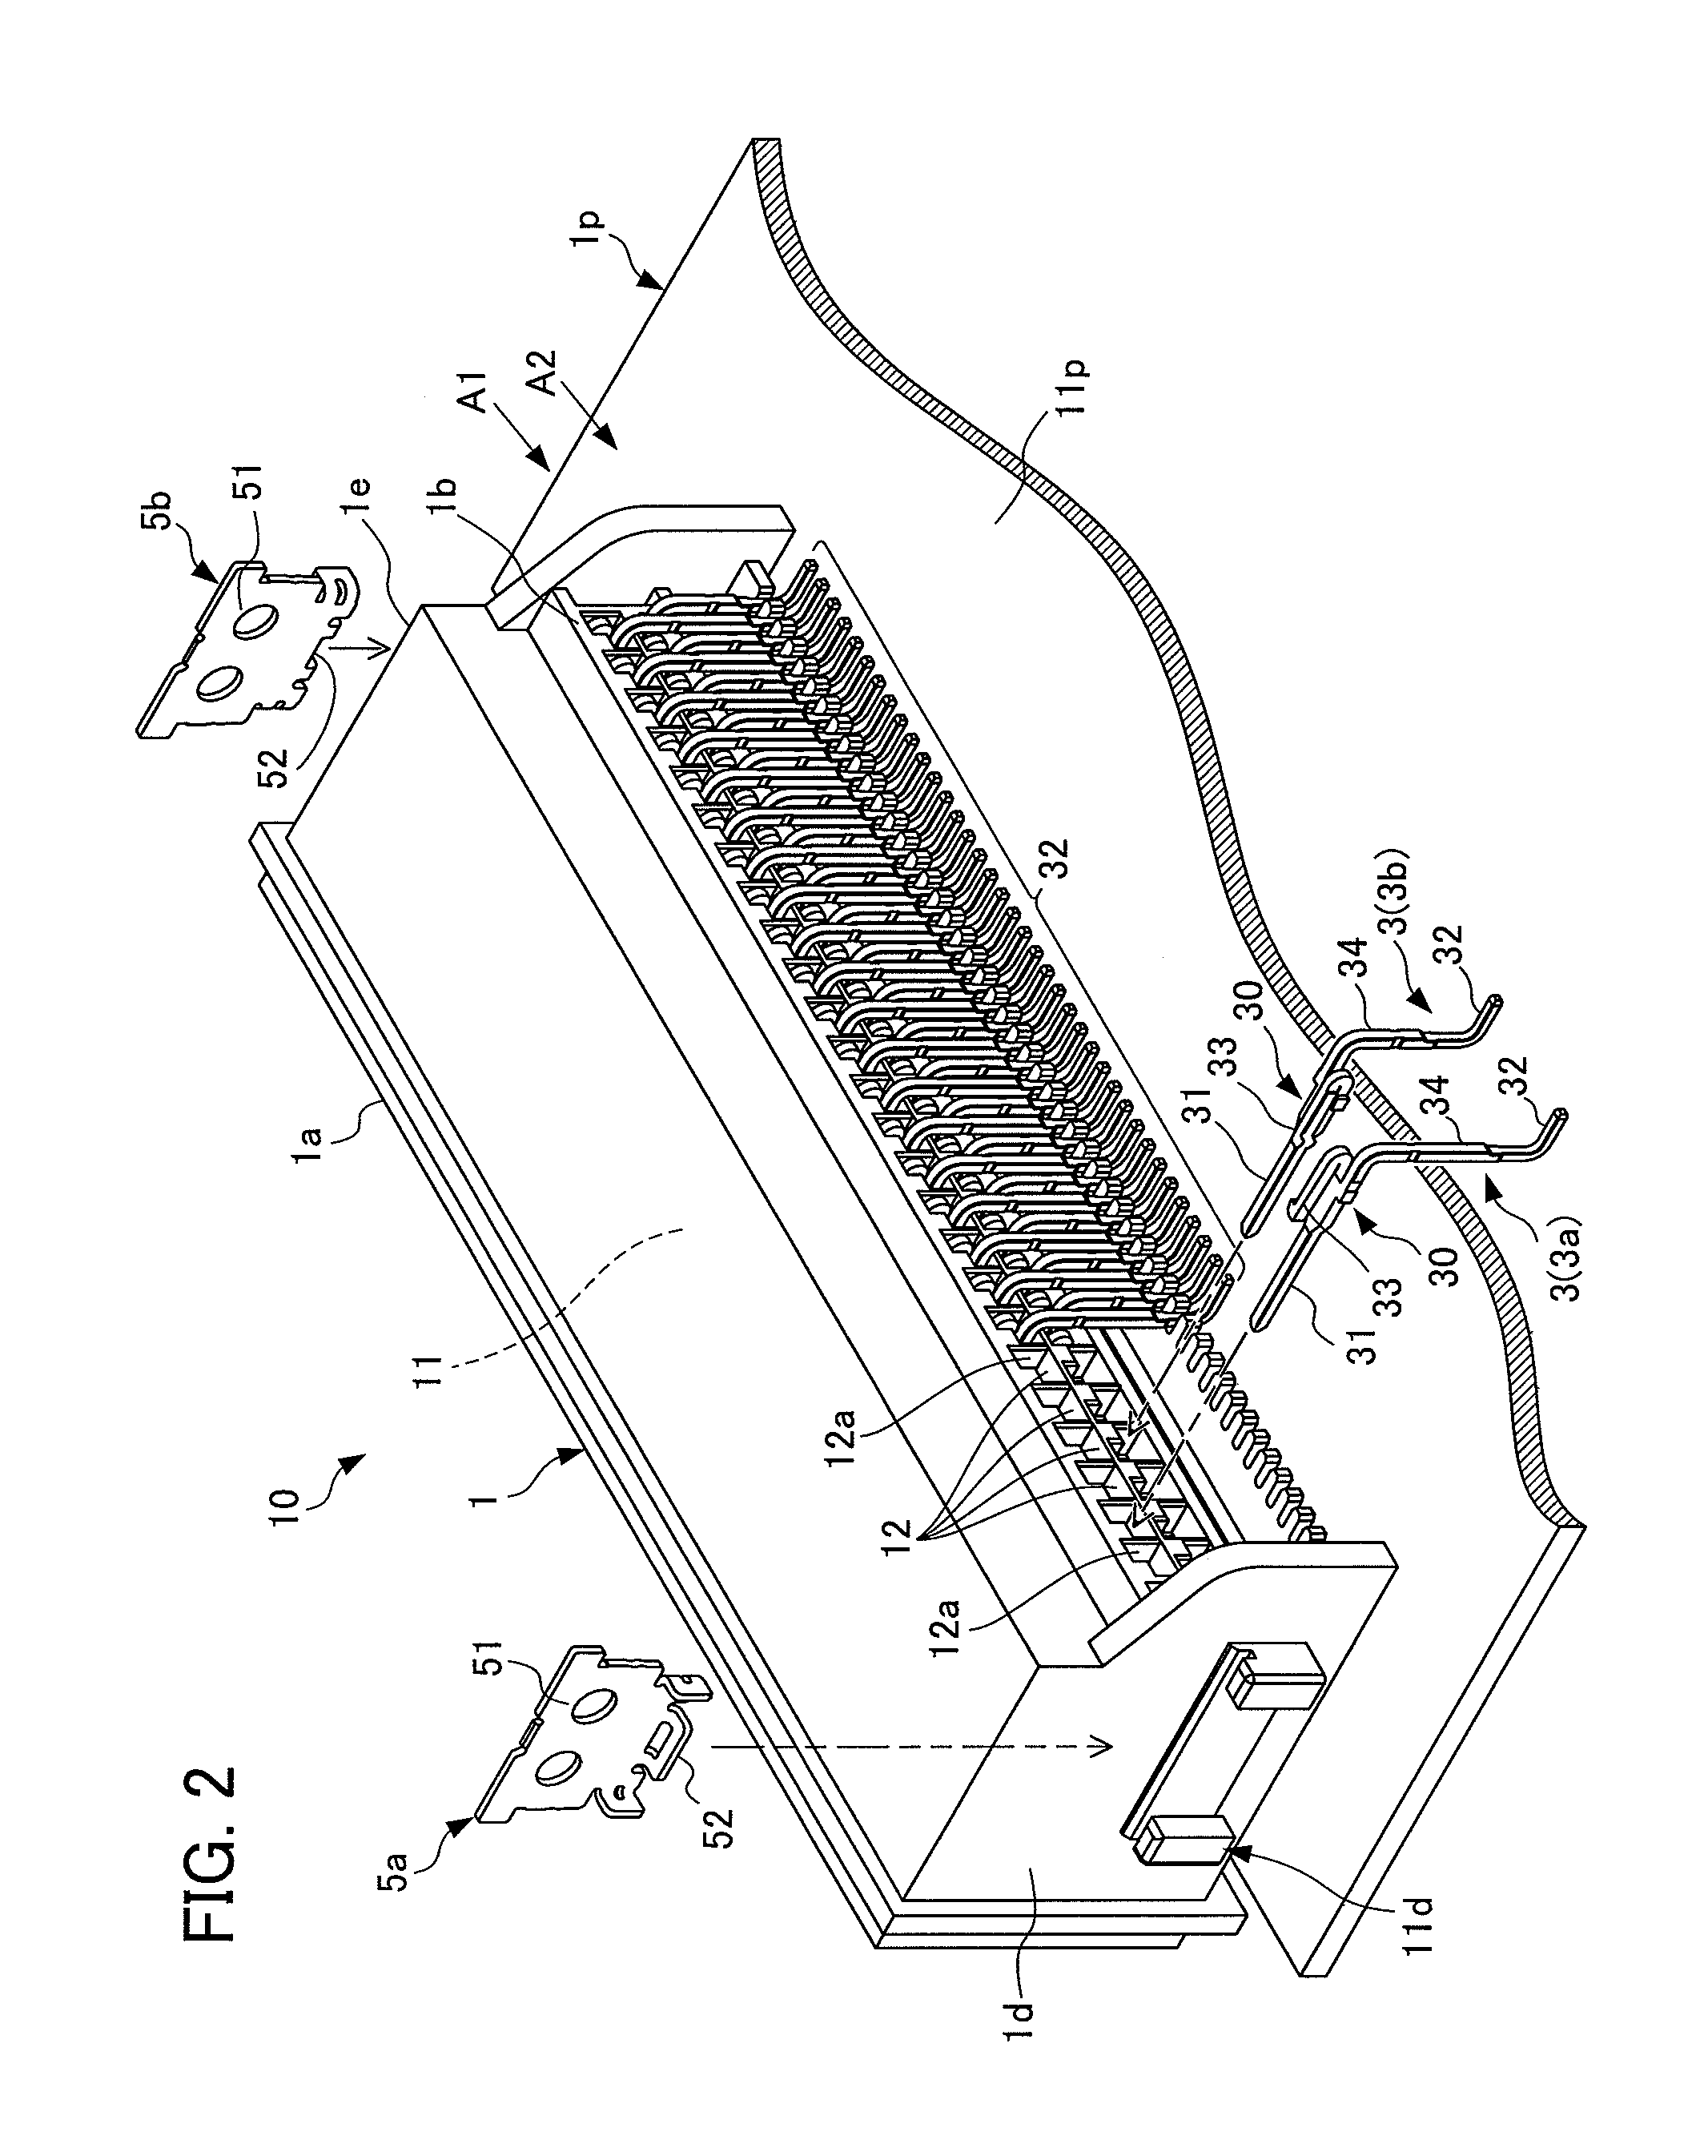 Printed circuit board connector